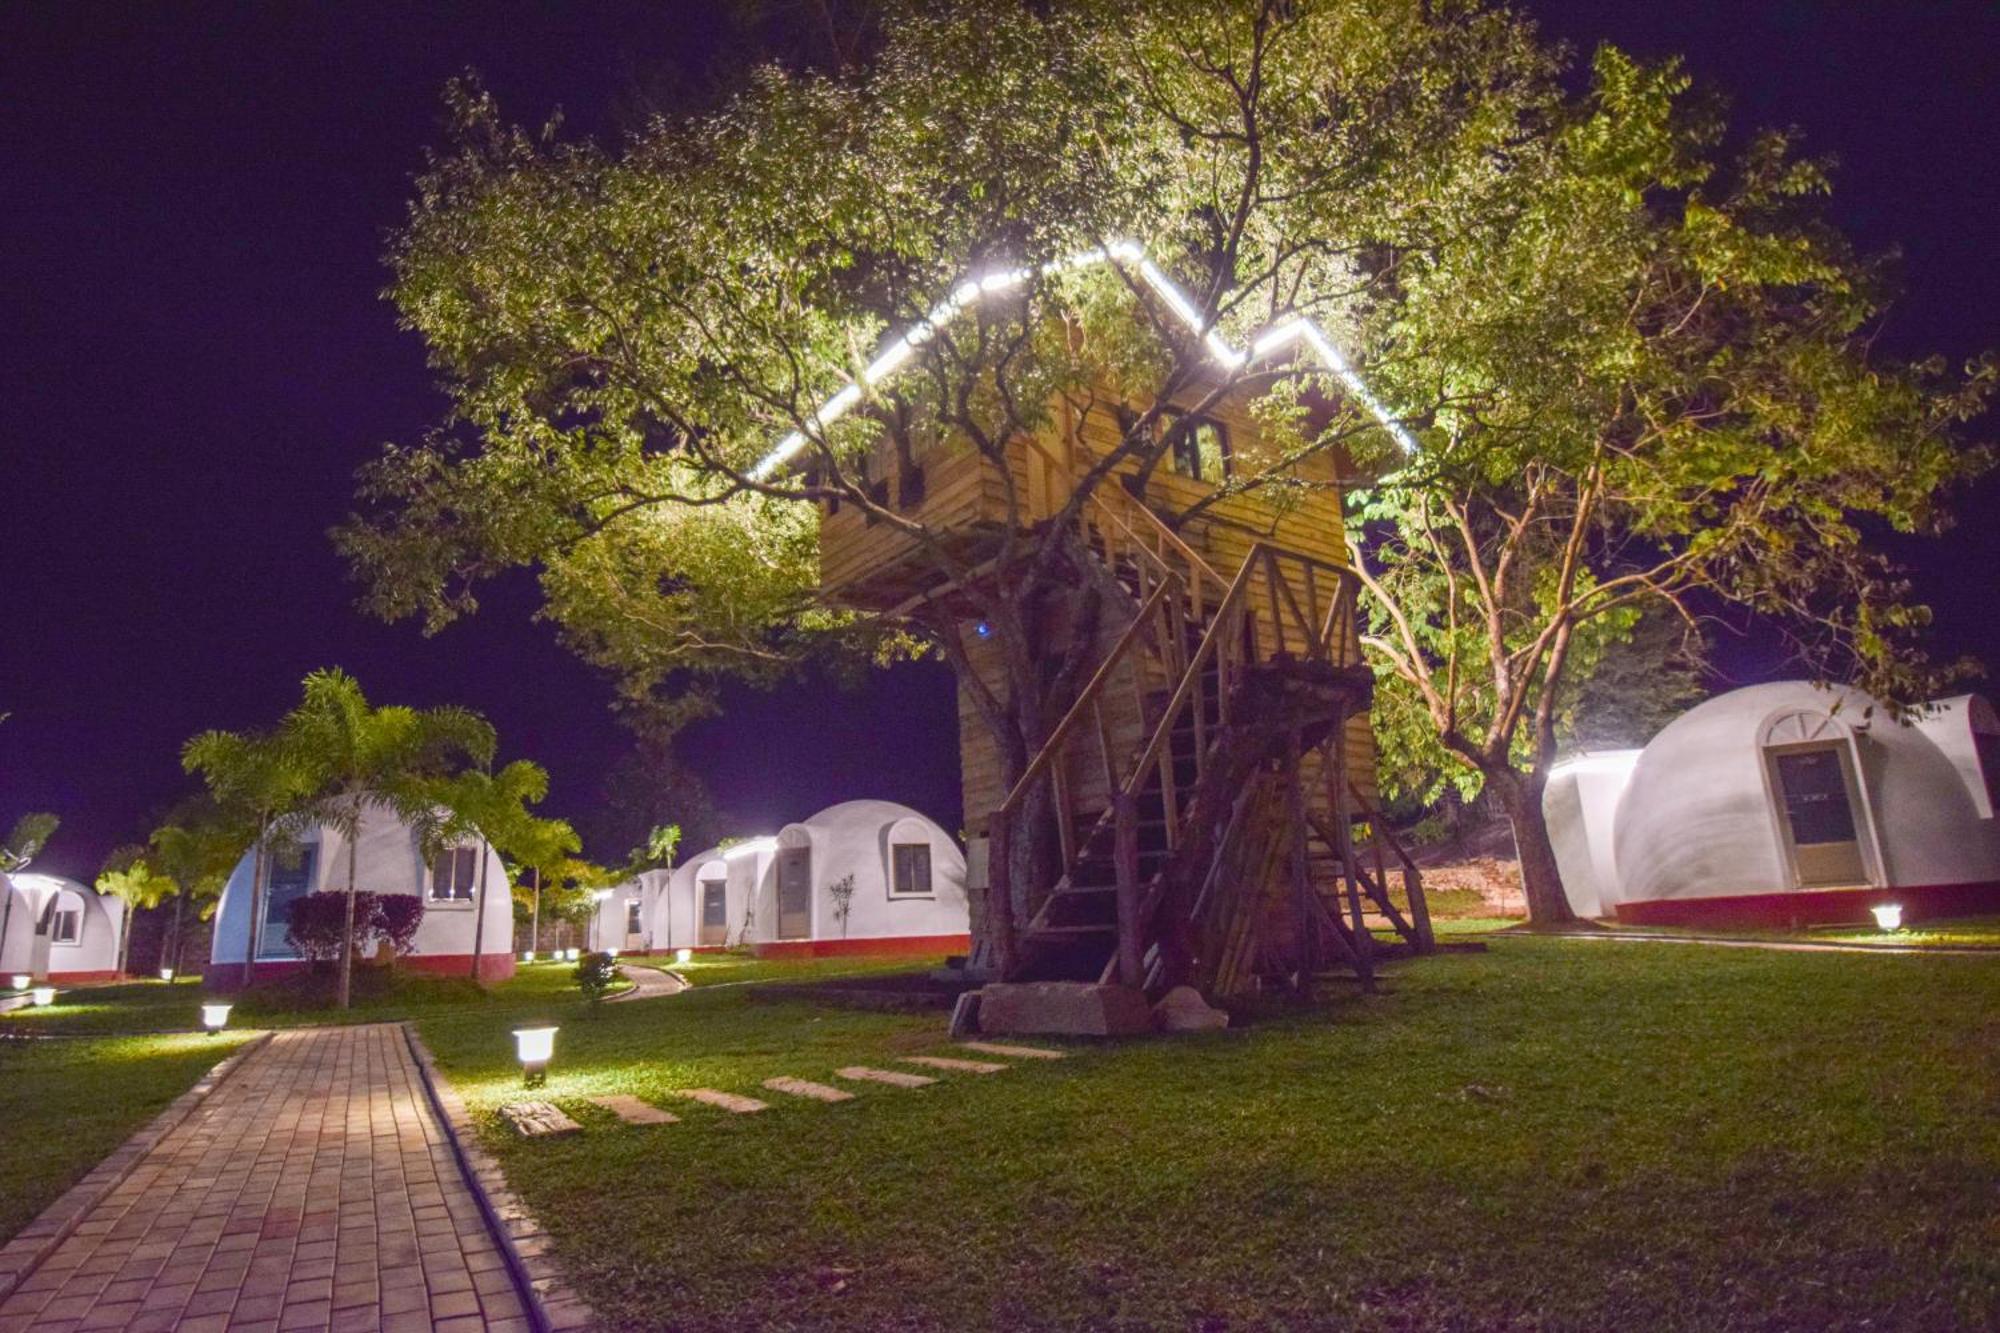 The Lion Kingdom Sigiriya Hotel ภายนอก รูปภาพ